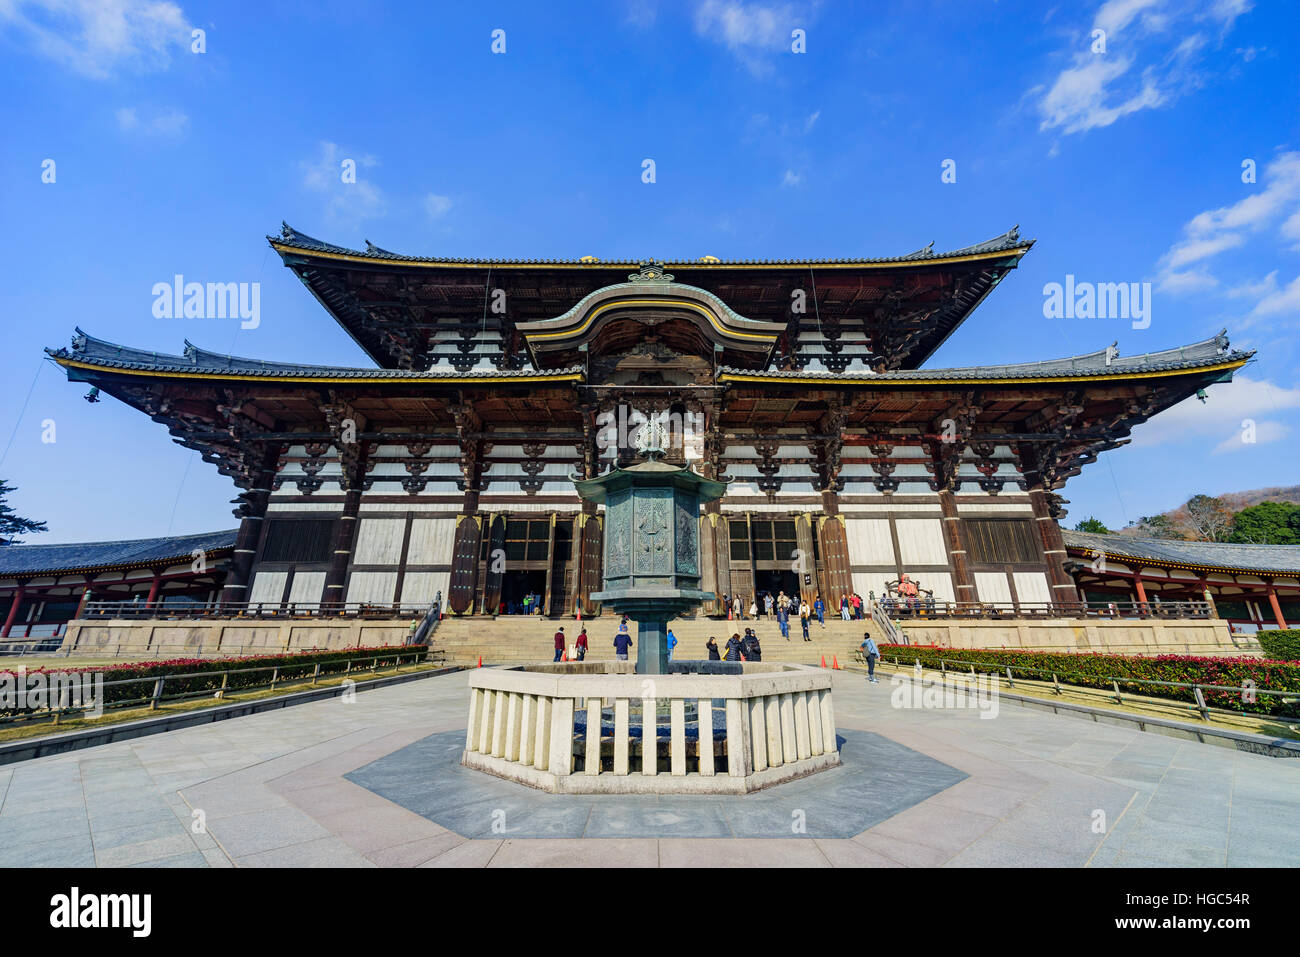 Nara, DEC 17: The historical Horyu Ji (Temple of the Flourishing Law) on DEC 17, 2016 at Nara, Japan Stock Photo